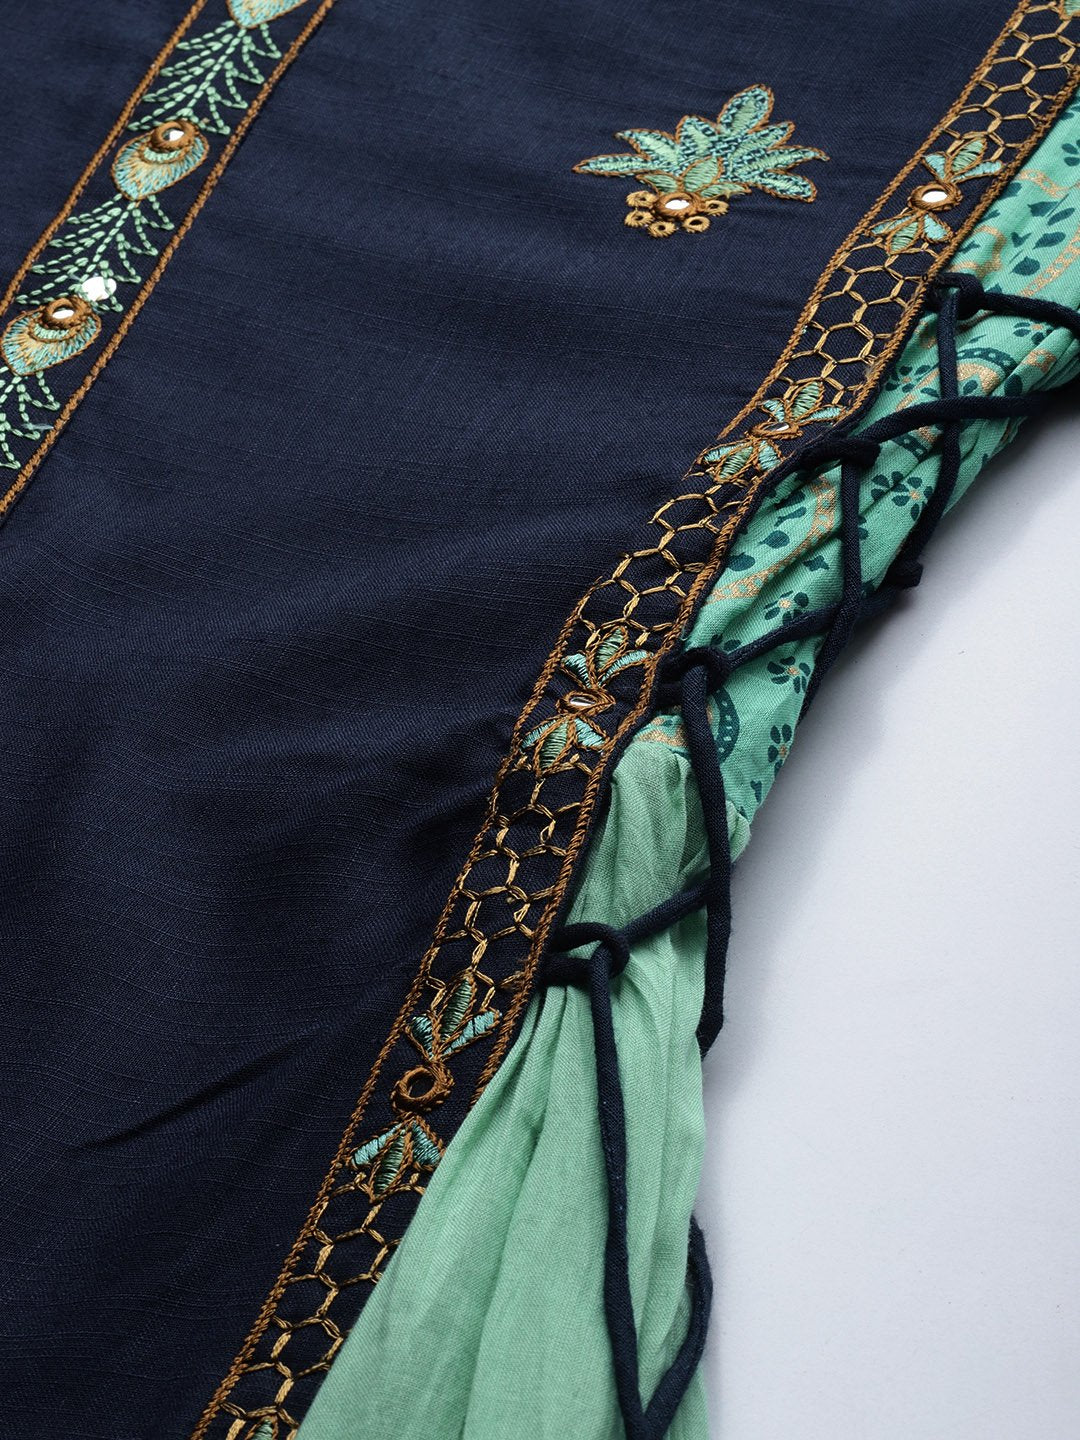 Ishin Women's Rayon Blue & Sea Green Embroidered Layered Kurta